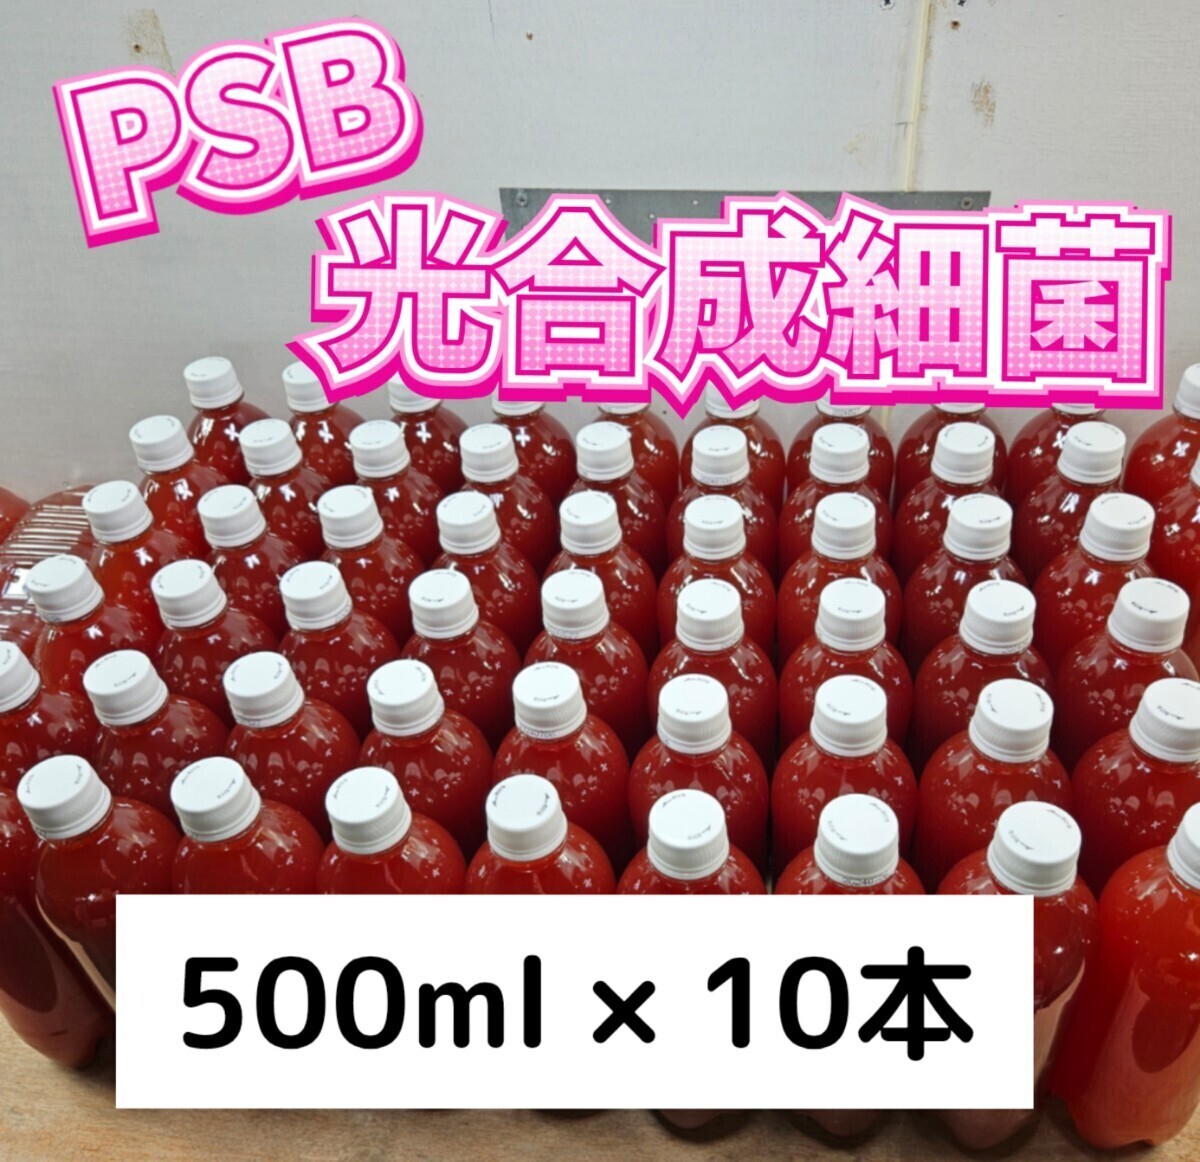 PSB【500ml×10本】光合成細菌 メダカ 水質改善 バクテリア エサの画像1